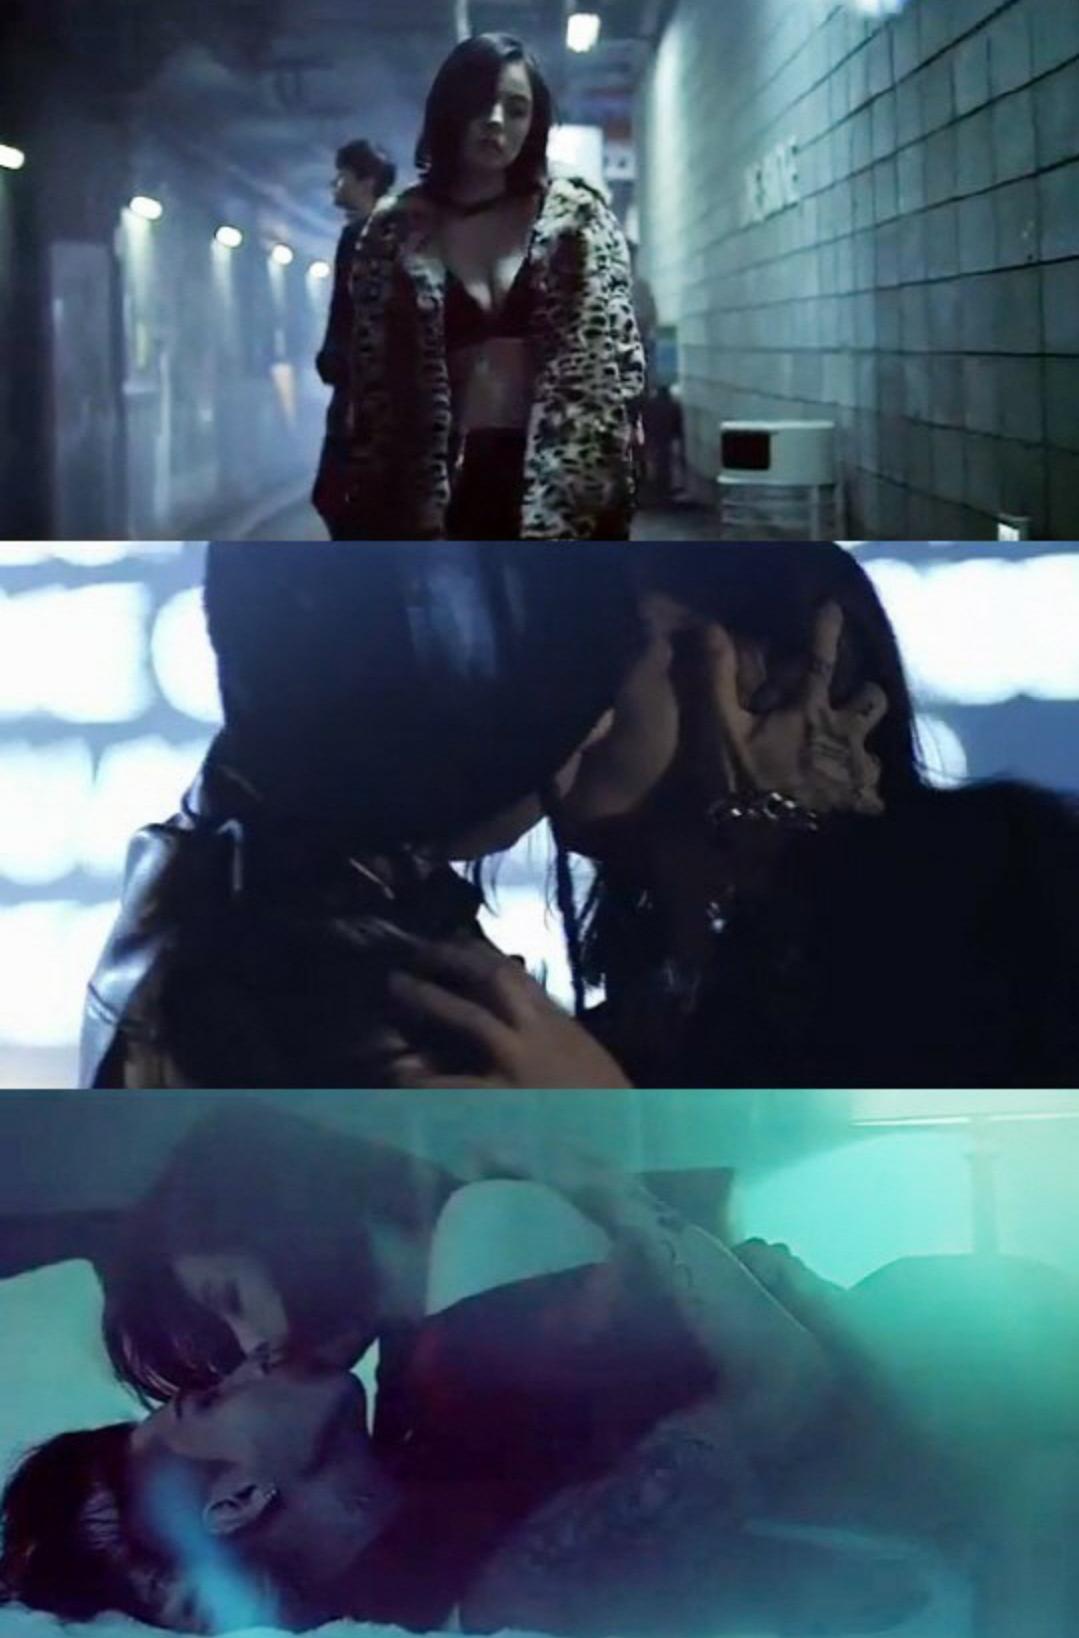 Taeyang's "1AM" Music Video starring Min Hyorin